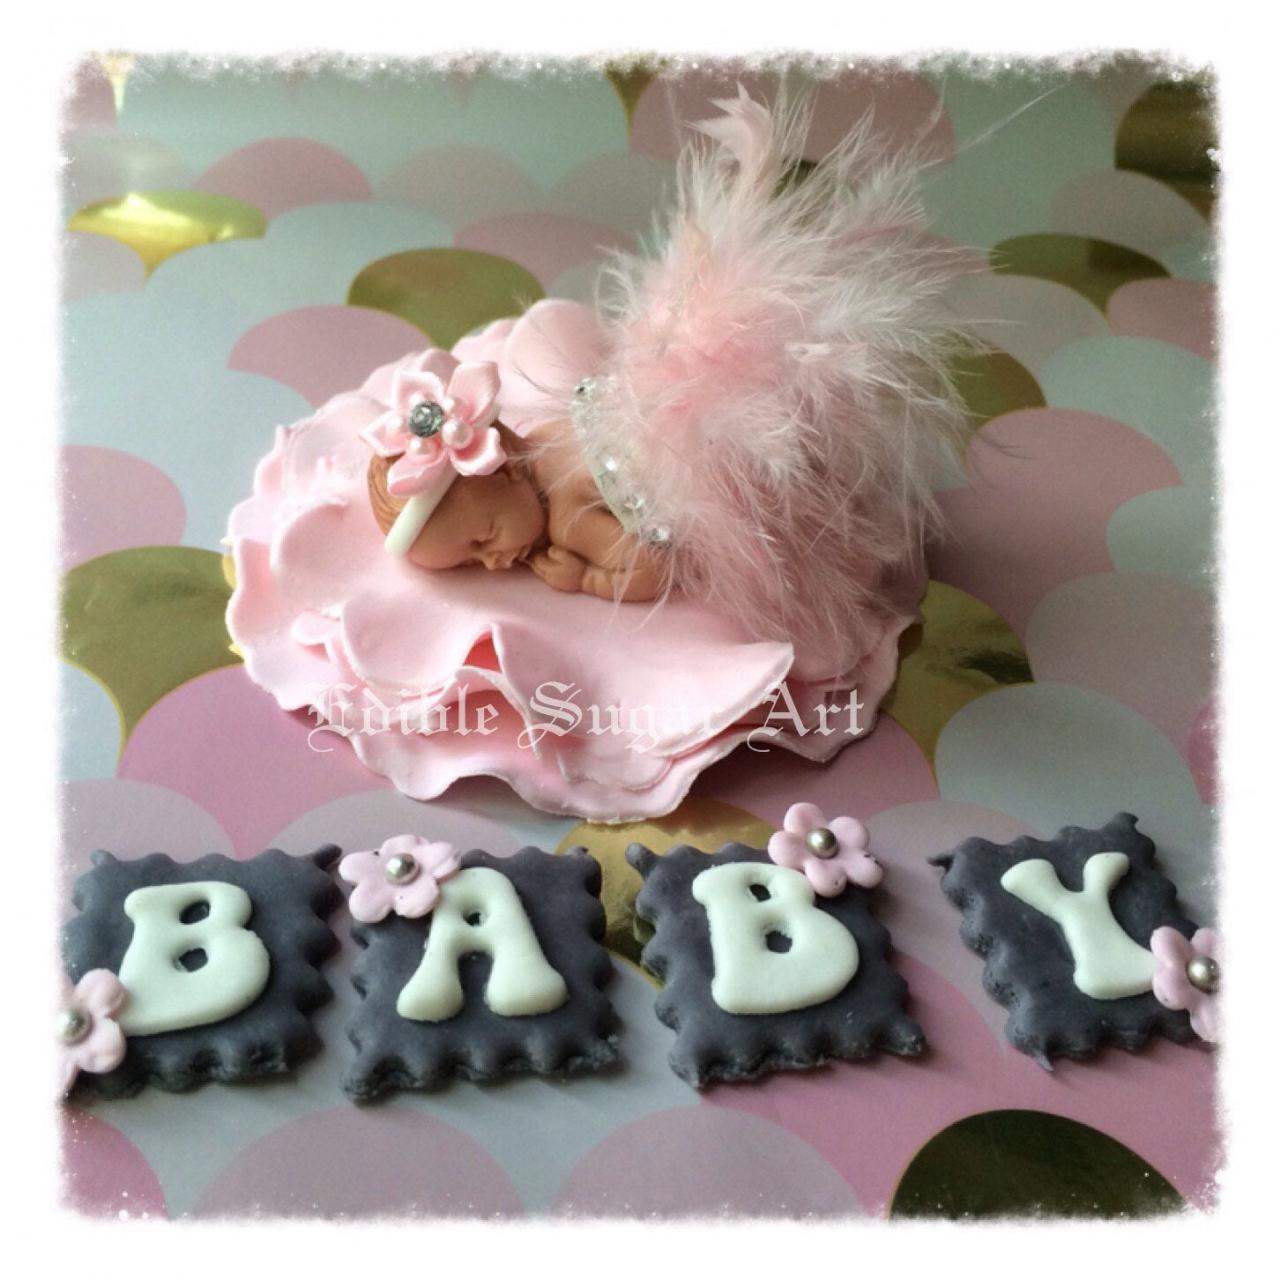 BABY SHOWER CAKE topper for a girl / princess baby shower / princess cake topper / princess decor / fondant cake topper